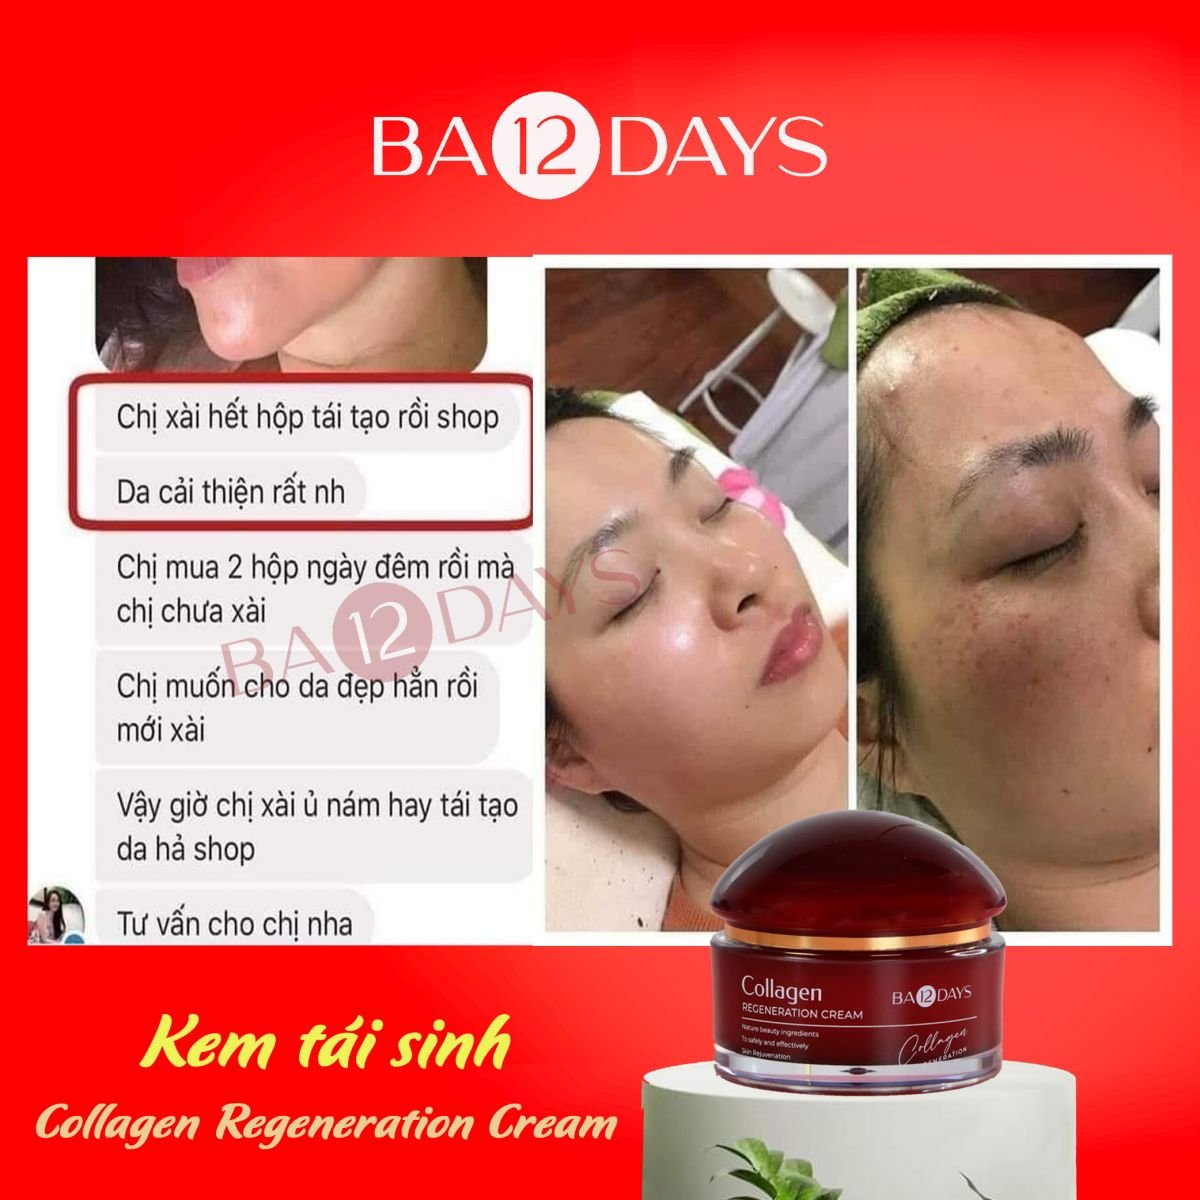 Kem dưỡng tái sinh Collagen Regeneration Cream Ba12days Cosmetics giúp 